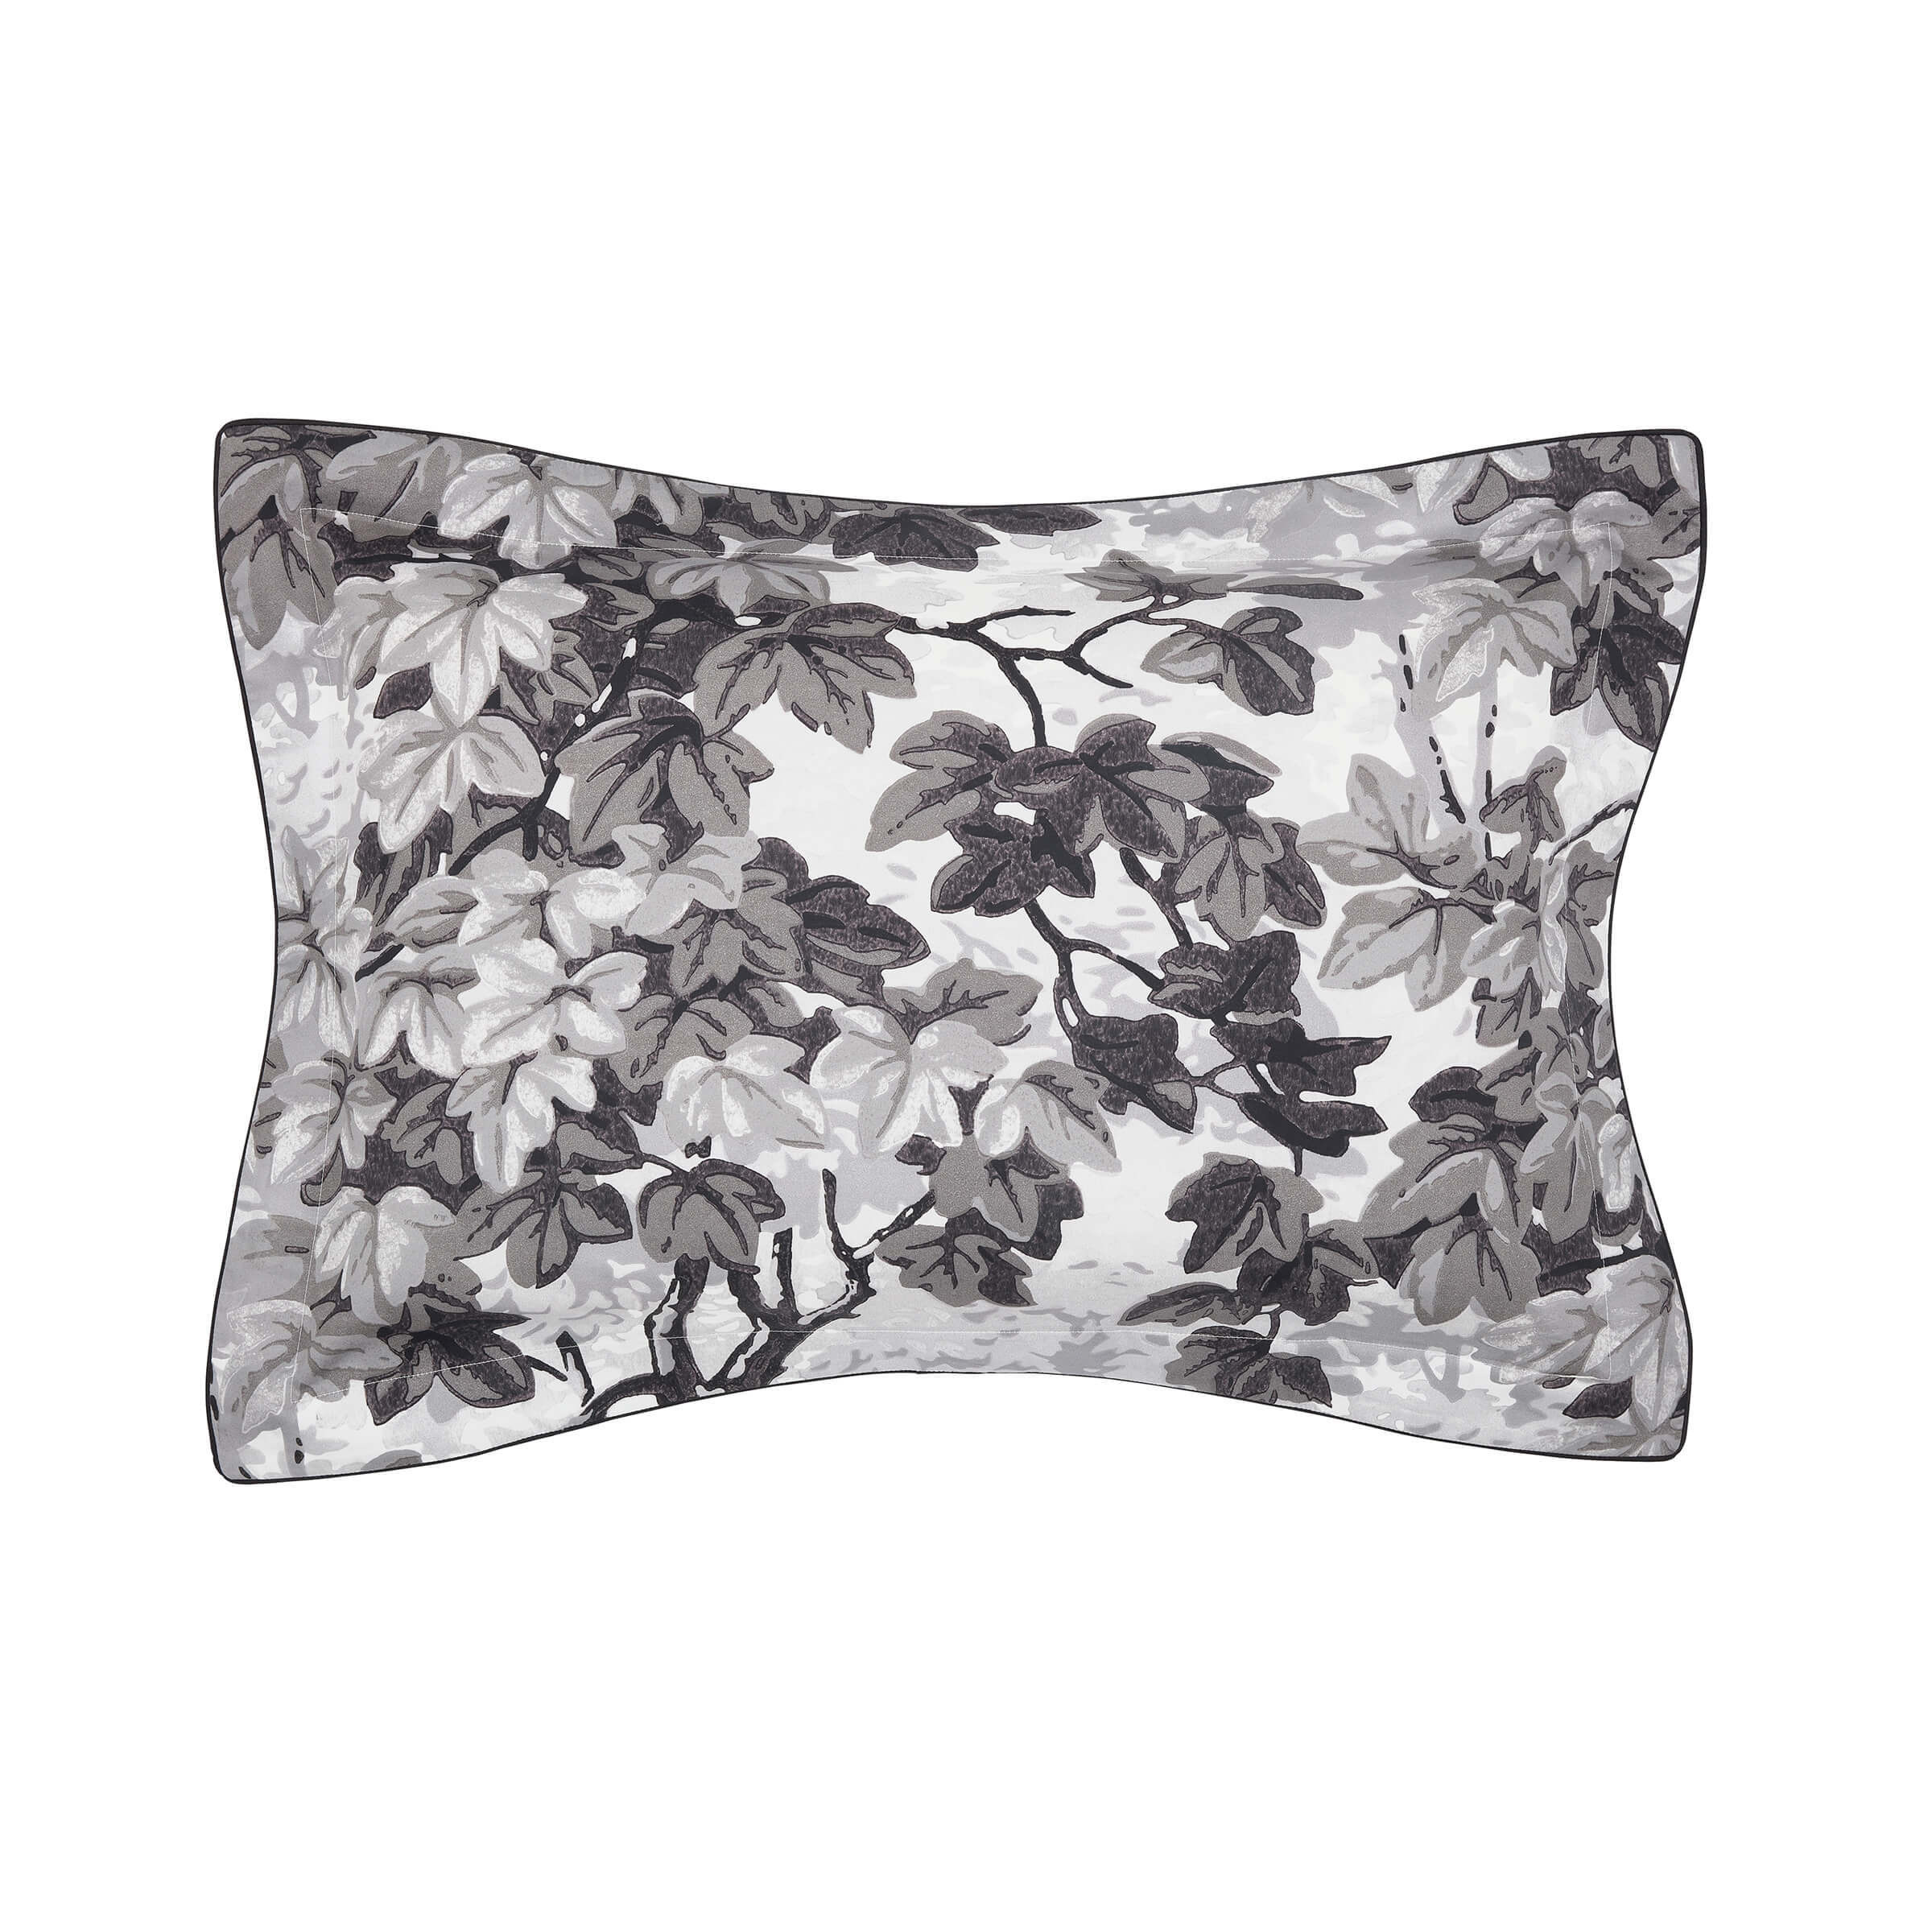 Zoffany Richmond Park Oxford Pillowcase, Charcoal - image 1